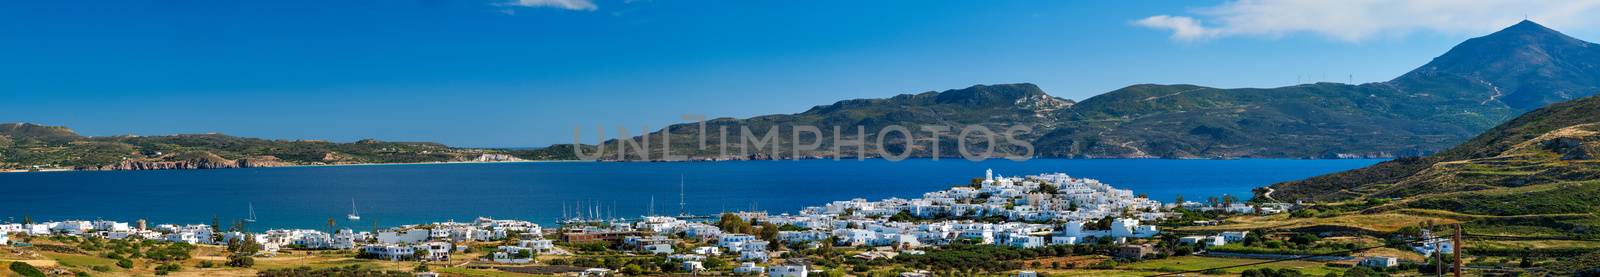 View of Plaka village with traditional Greek church. Milos island, Greece by dimol